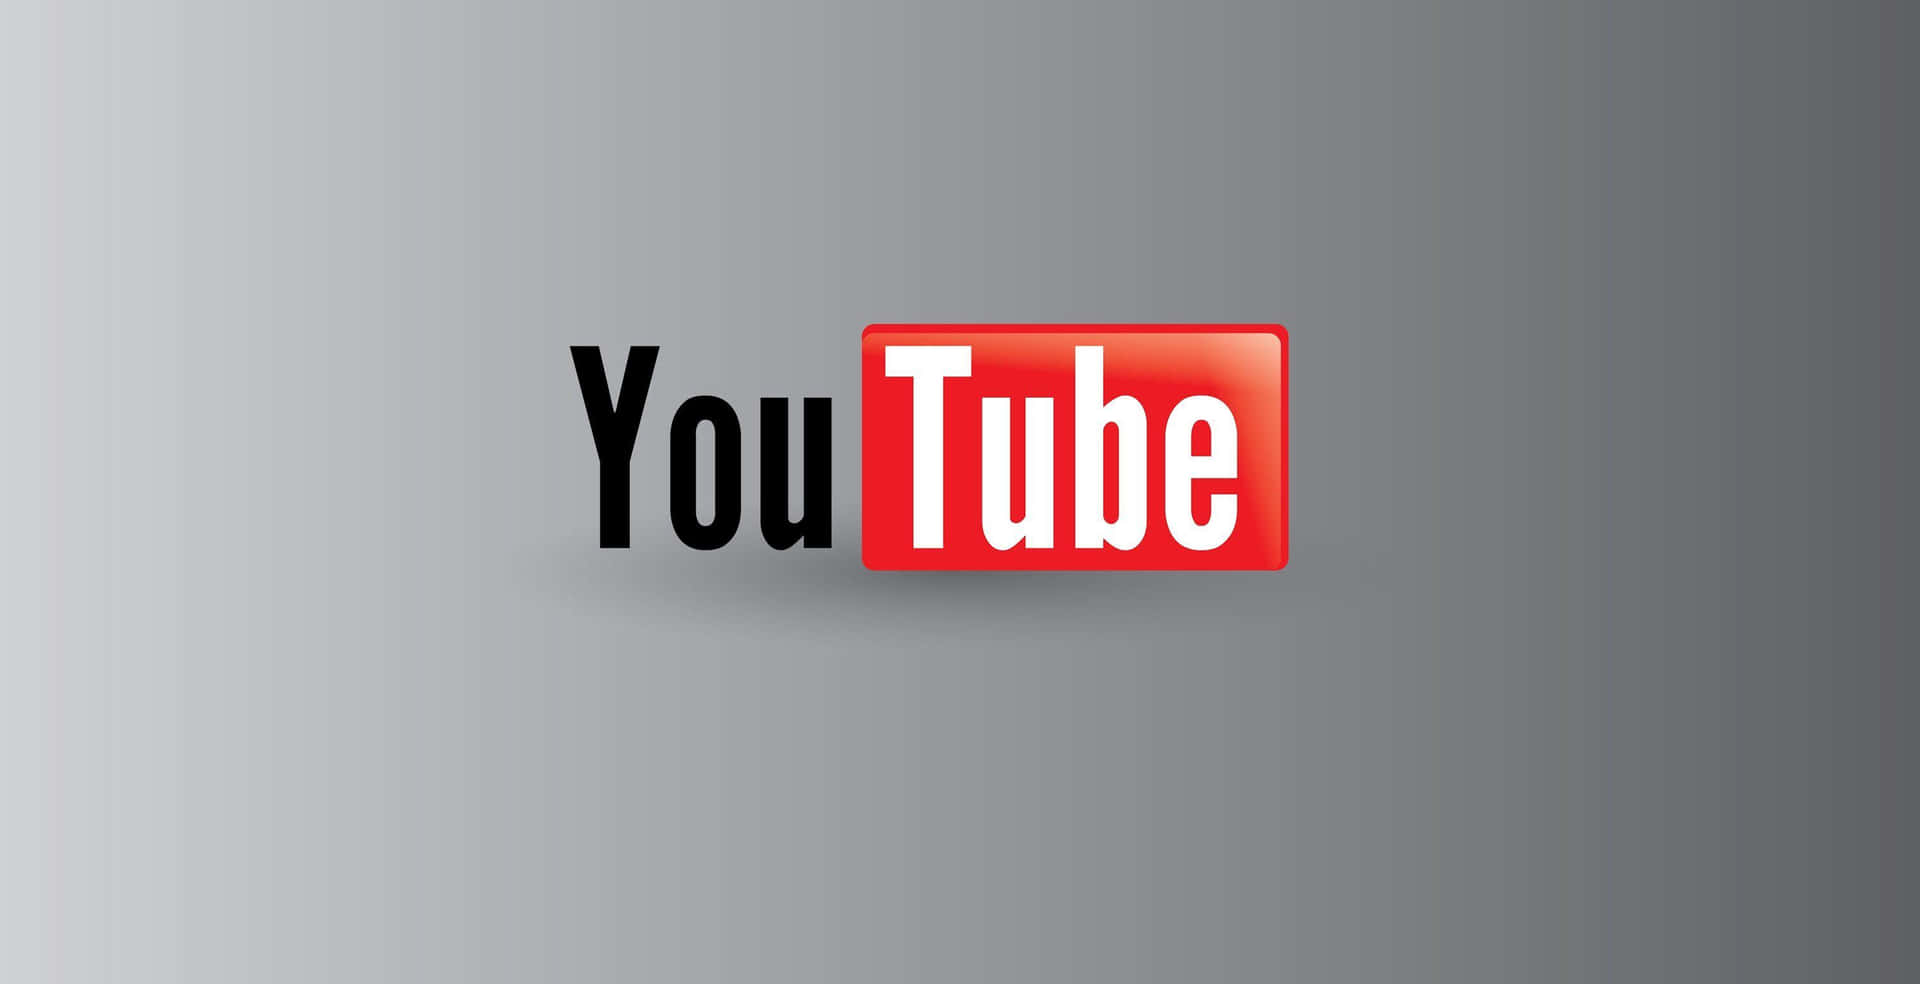 Logotipode Youtube Sobre Un Fondo De Gradiente Rojo.